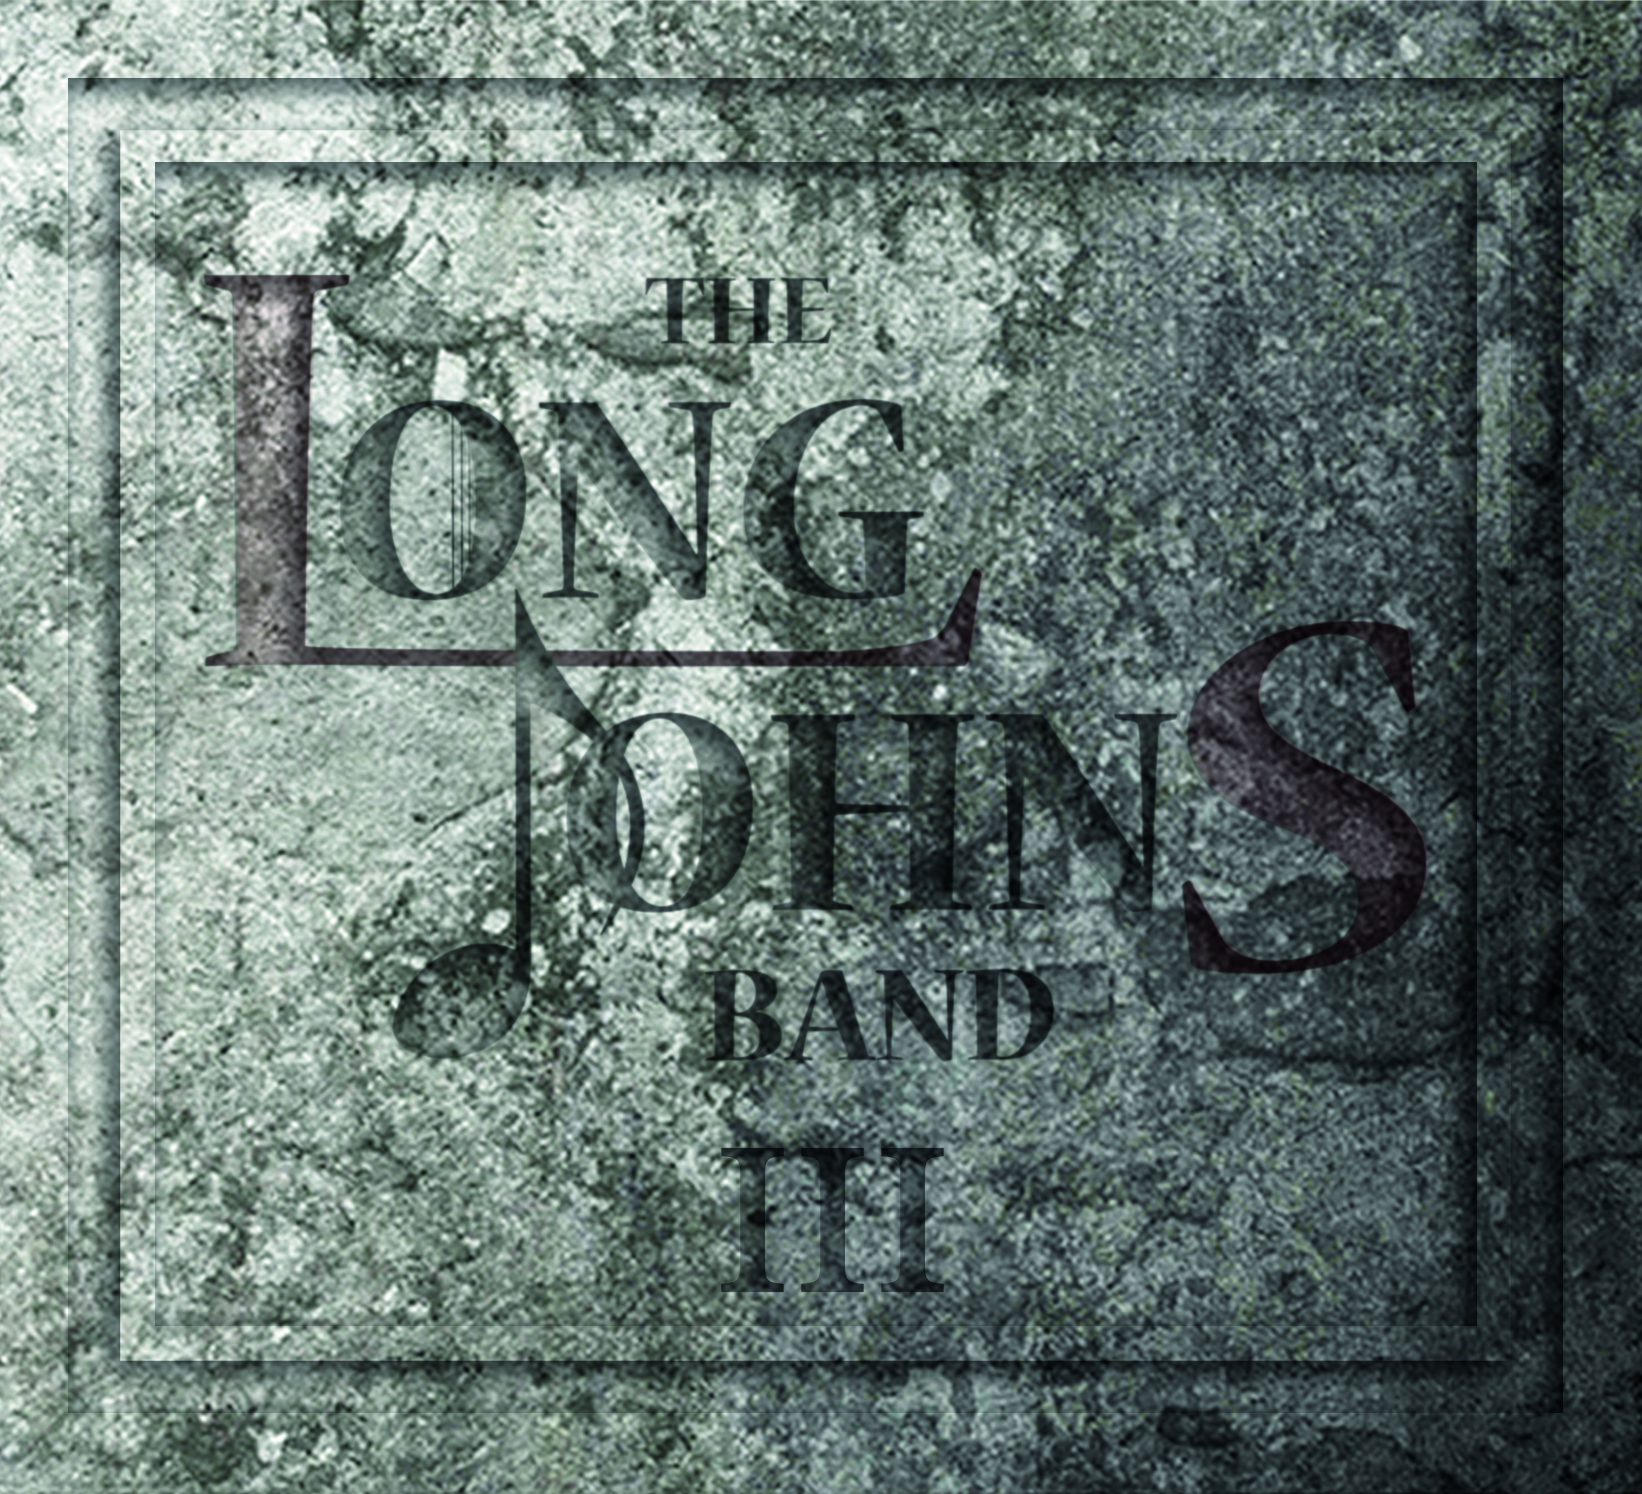 THE LONG JOHNS BAND